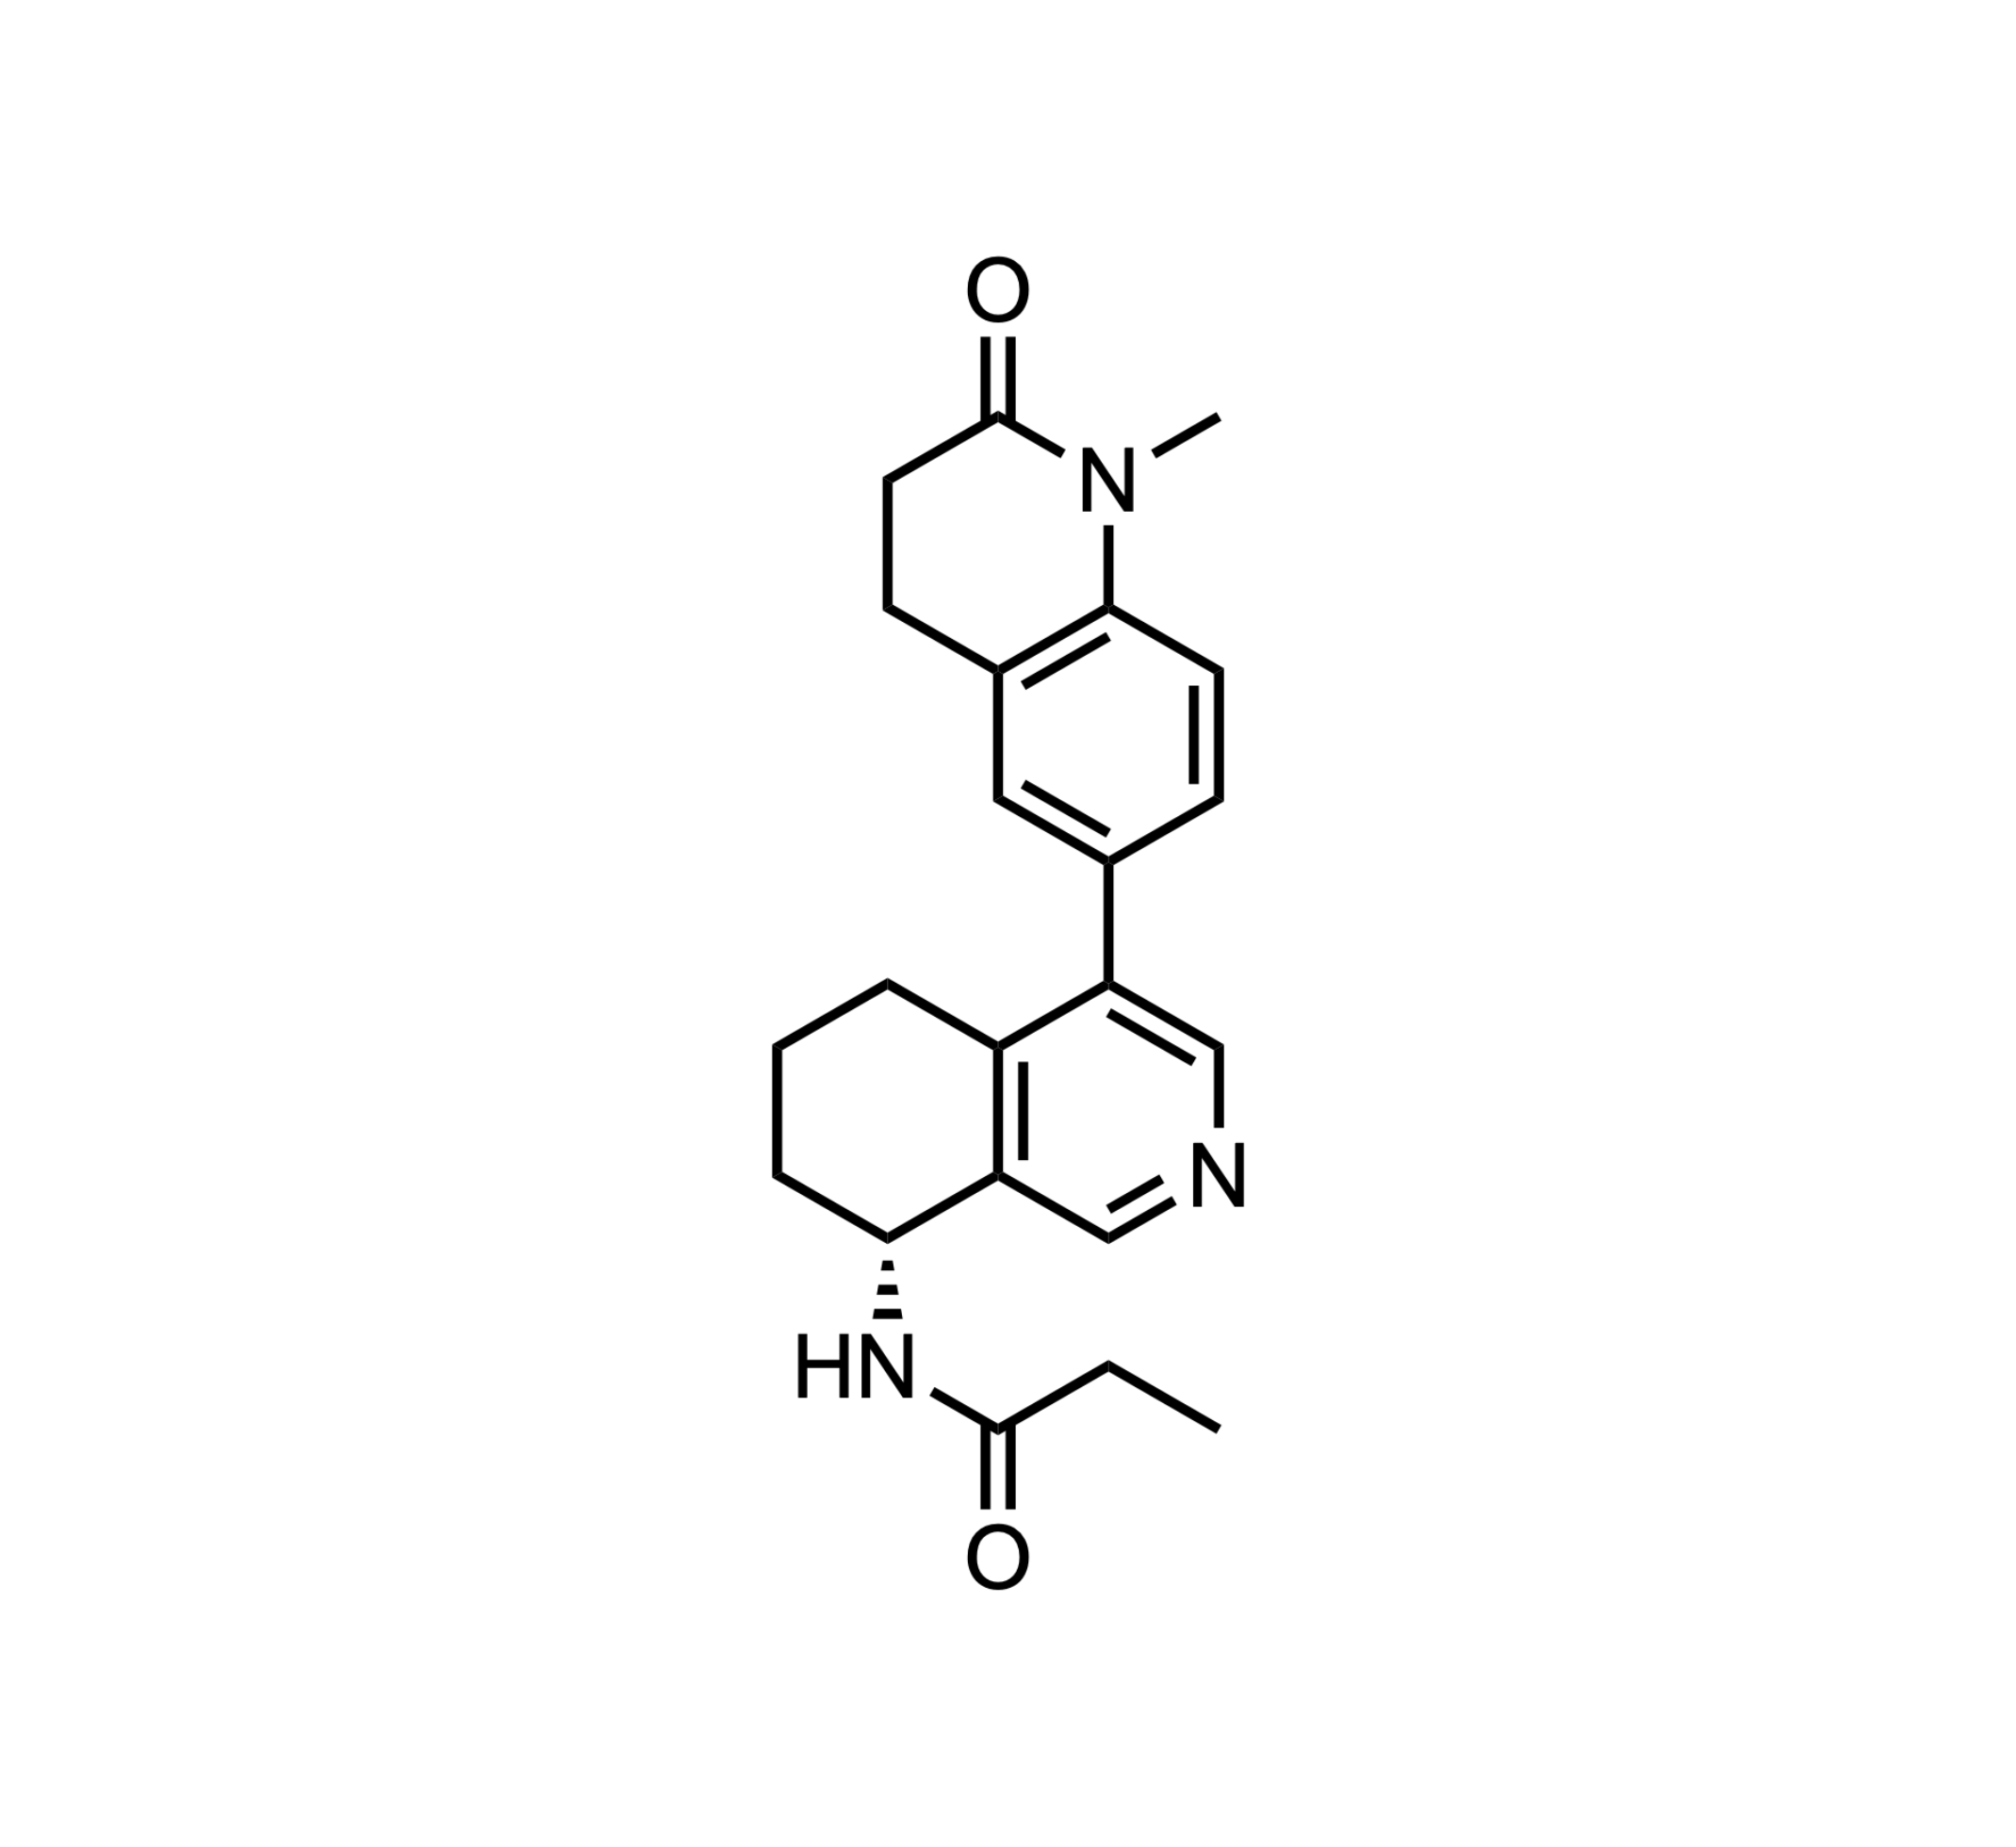 baxdrostat chemical structure oral aldosterone synthase (CYP11B2) inhibitor - Roche, Basel, CH (AstraZeneca)||||||